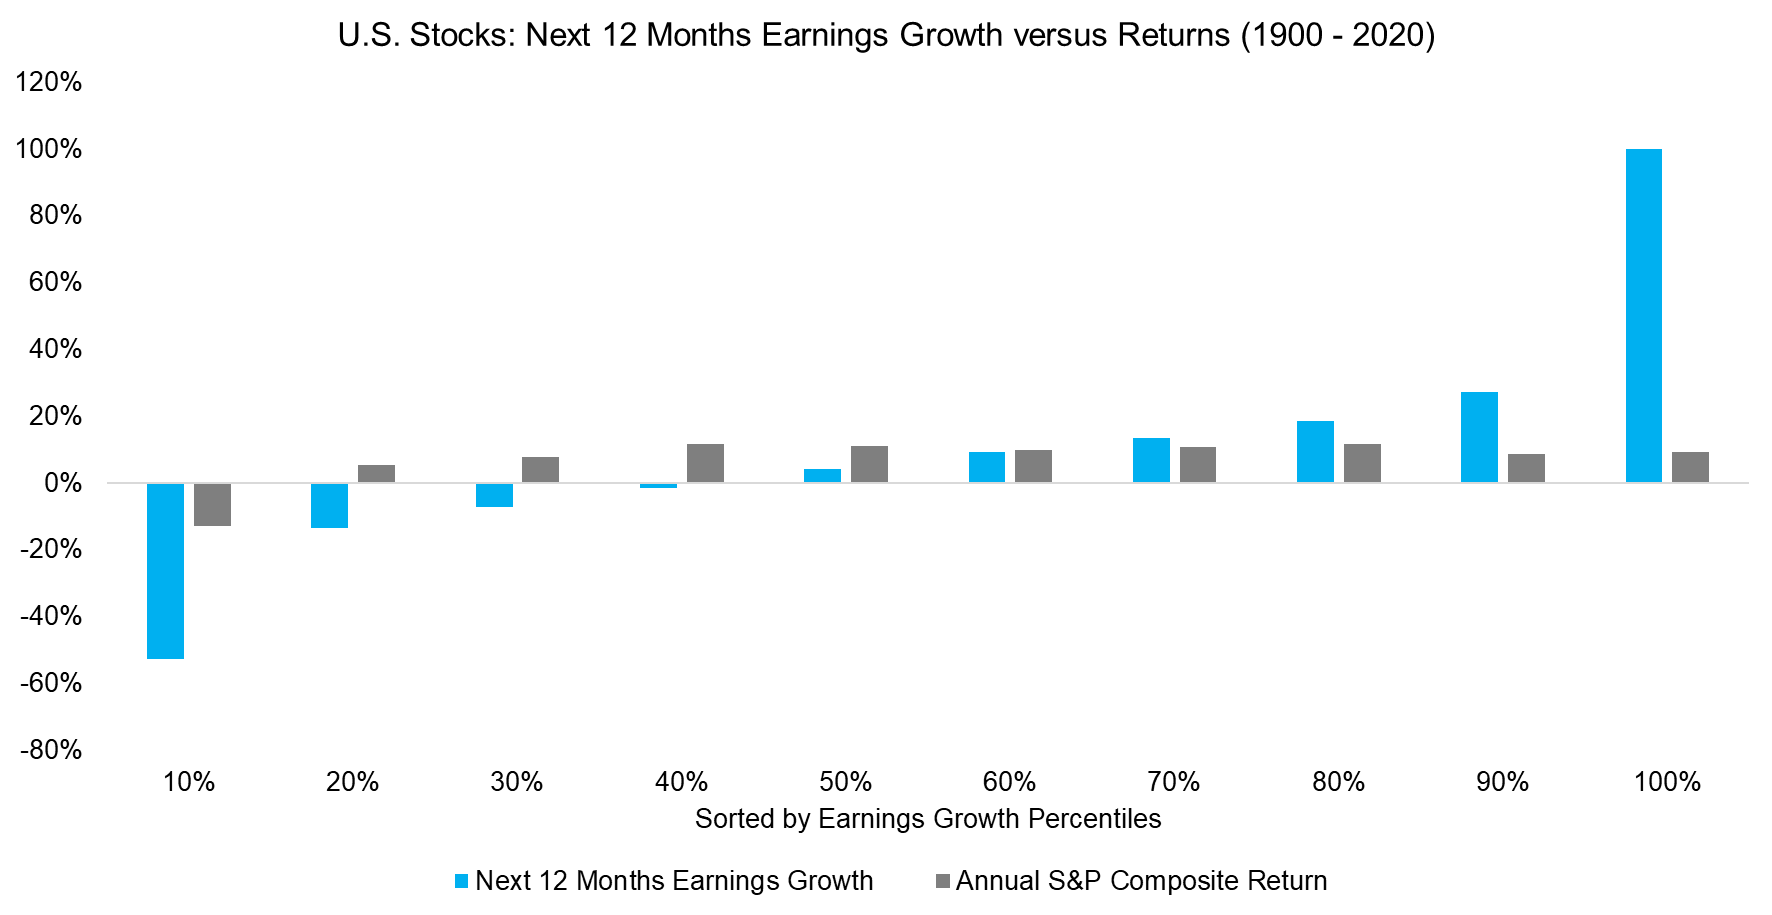 Next 12 Months Earnings Growth versus S&P 500 Returns (1900 - 2020)